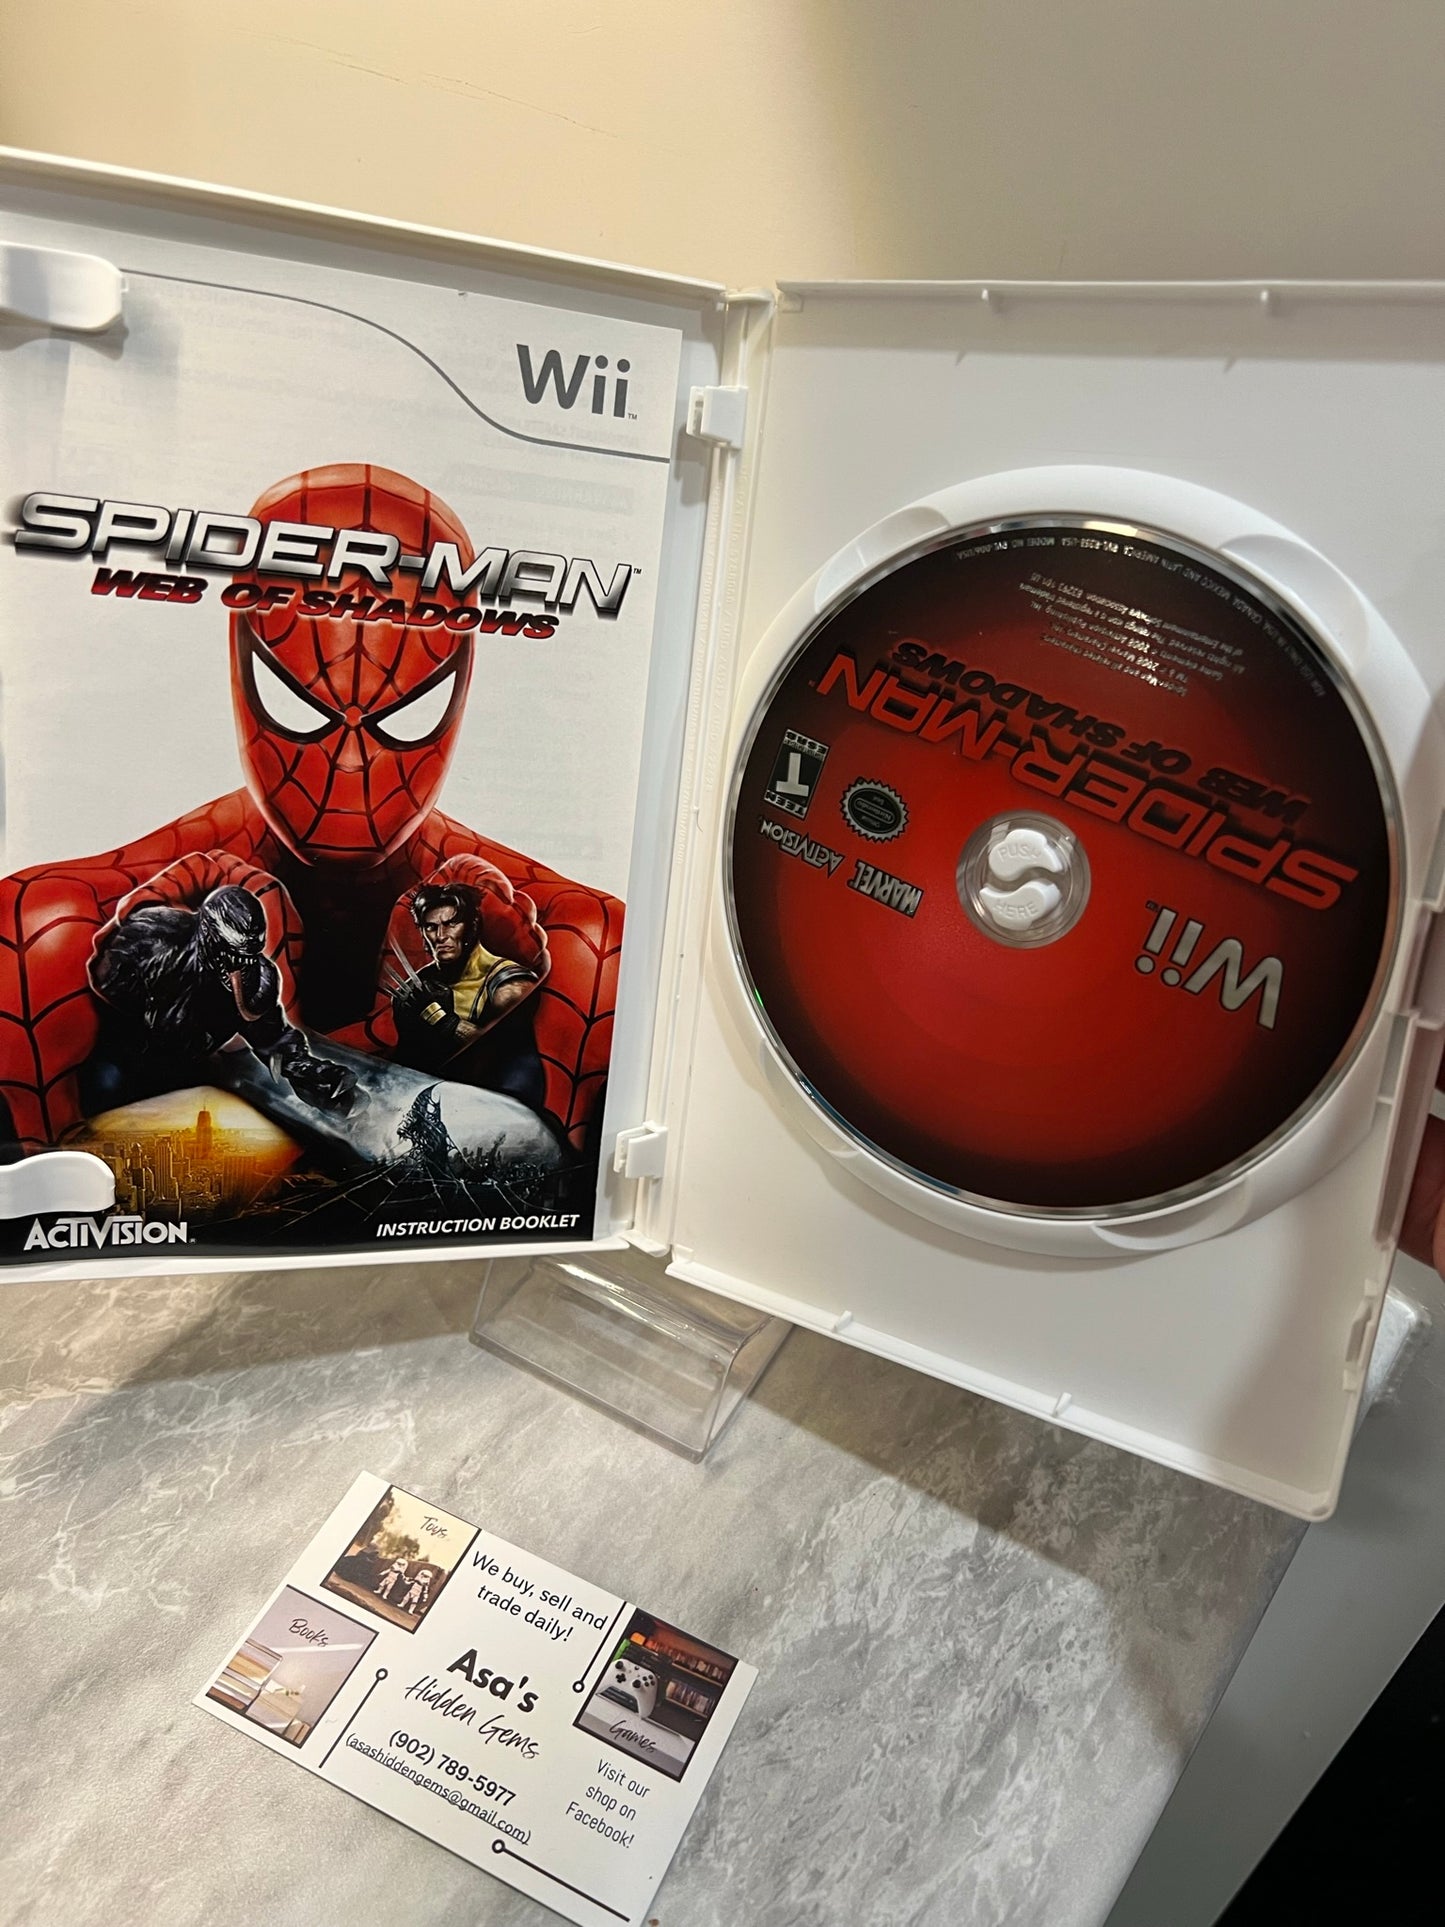 Spider-Man: Web of Shadows (Nintendo Wii, 2008)